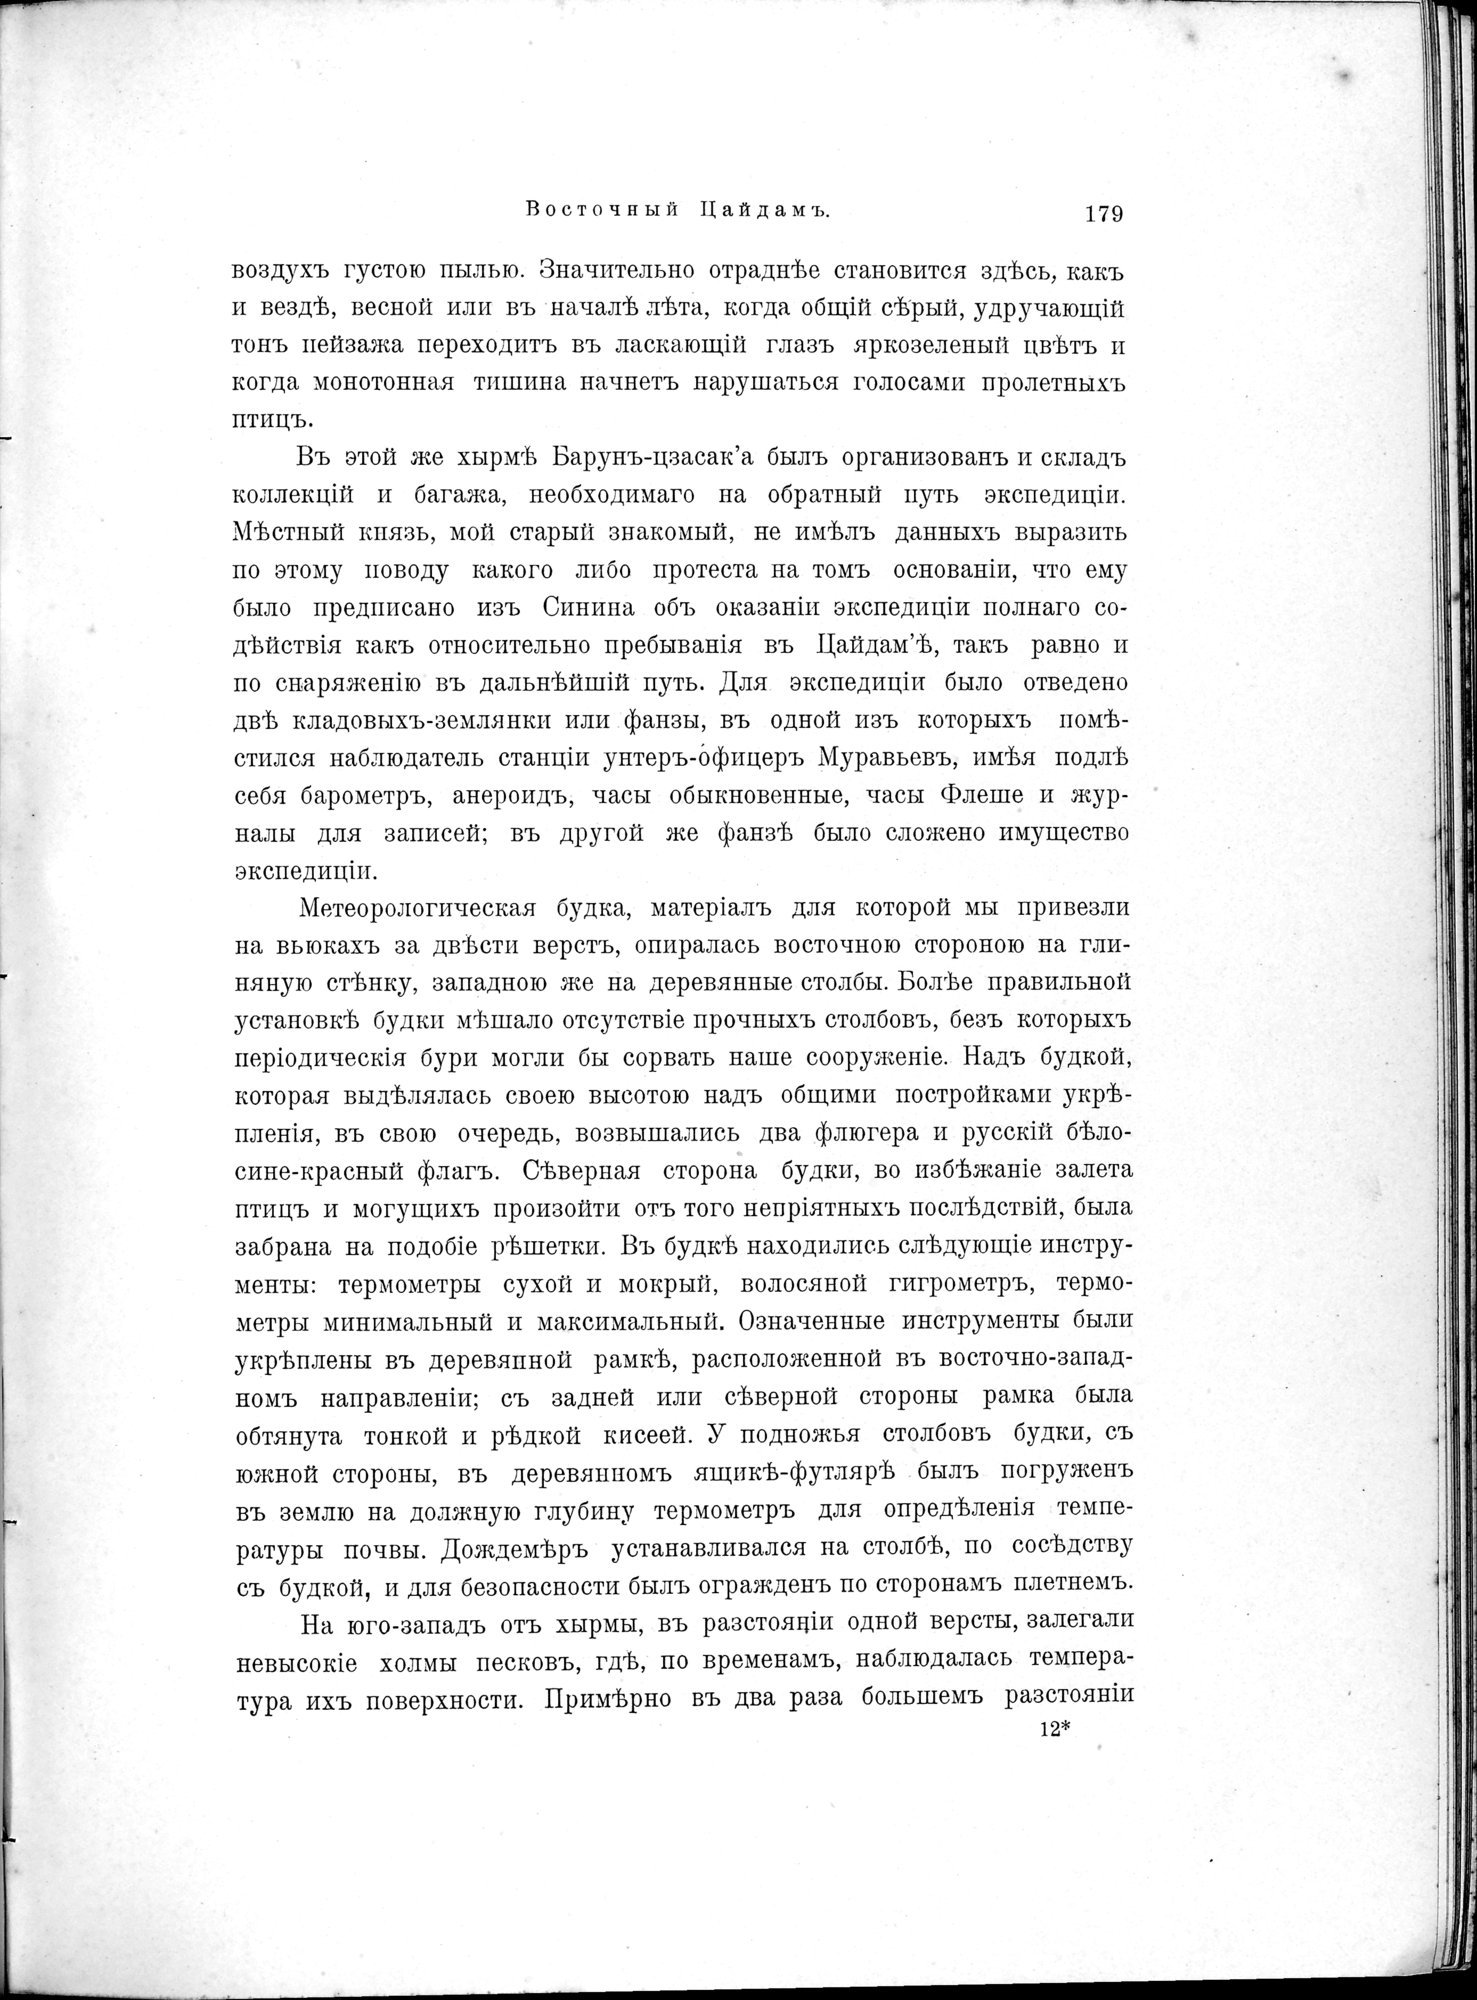 Mongoliia i Kam : vol.1 / Page 225 (Grayscale High Resolution Image)